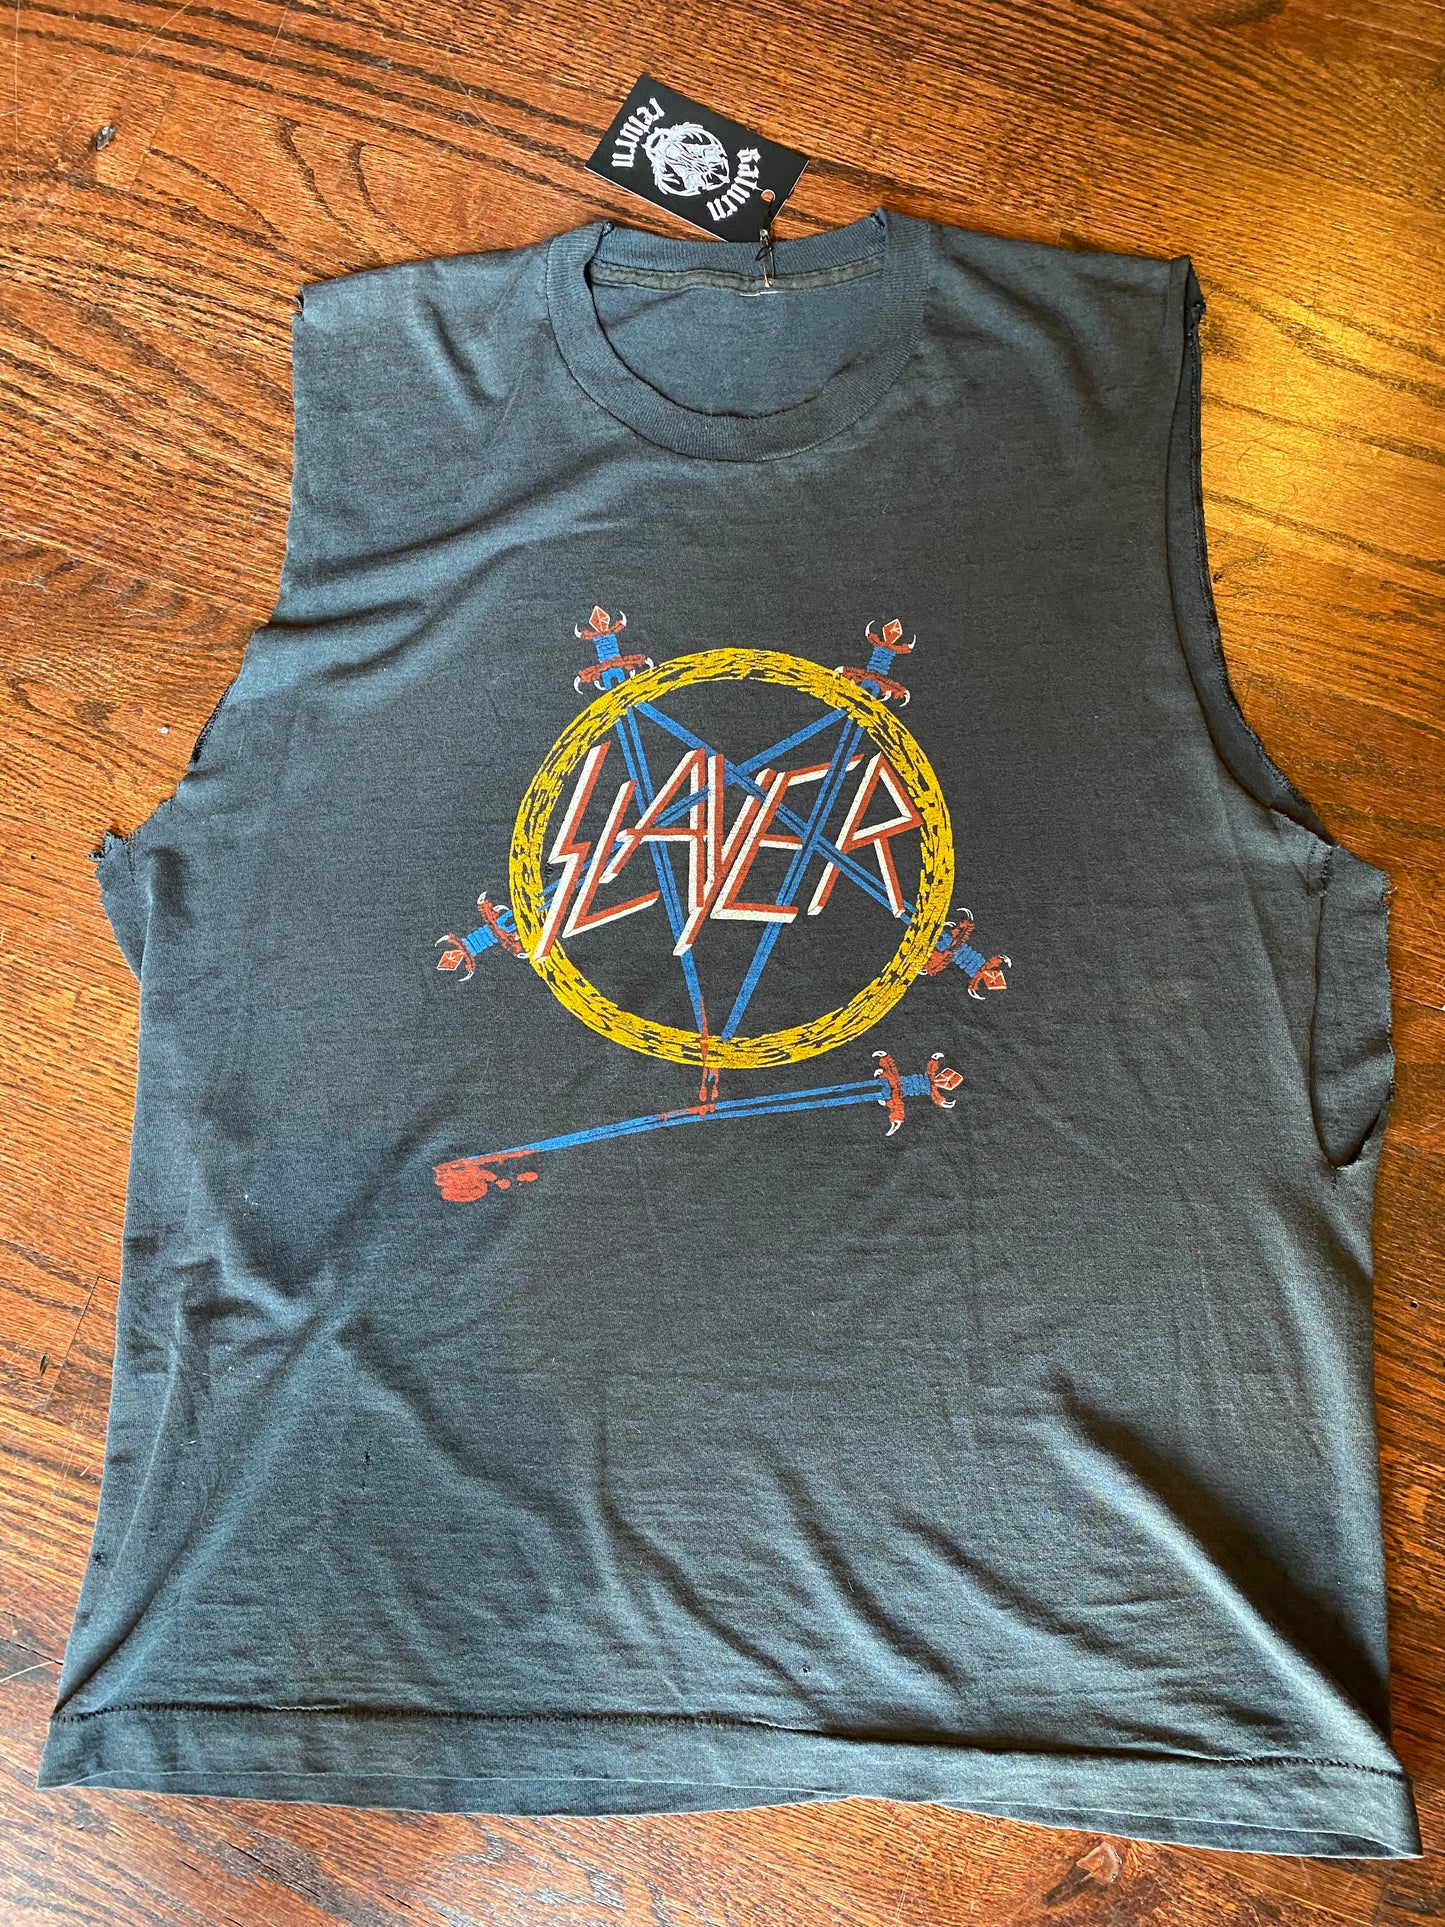 Vintage 1985 Slayer “Hell Awaits” Tour Sleeveless Shirt